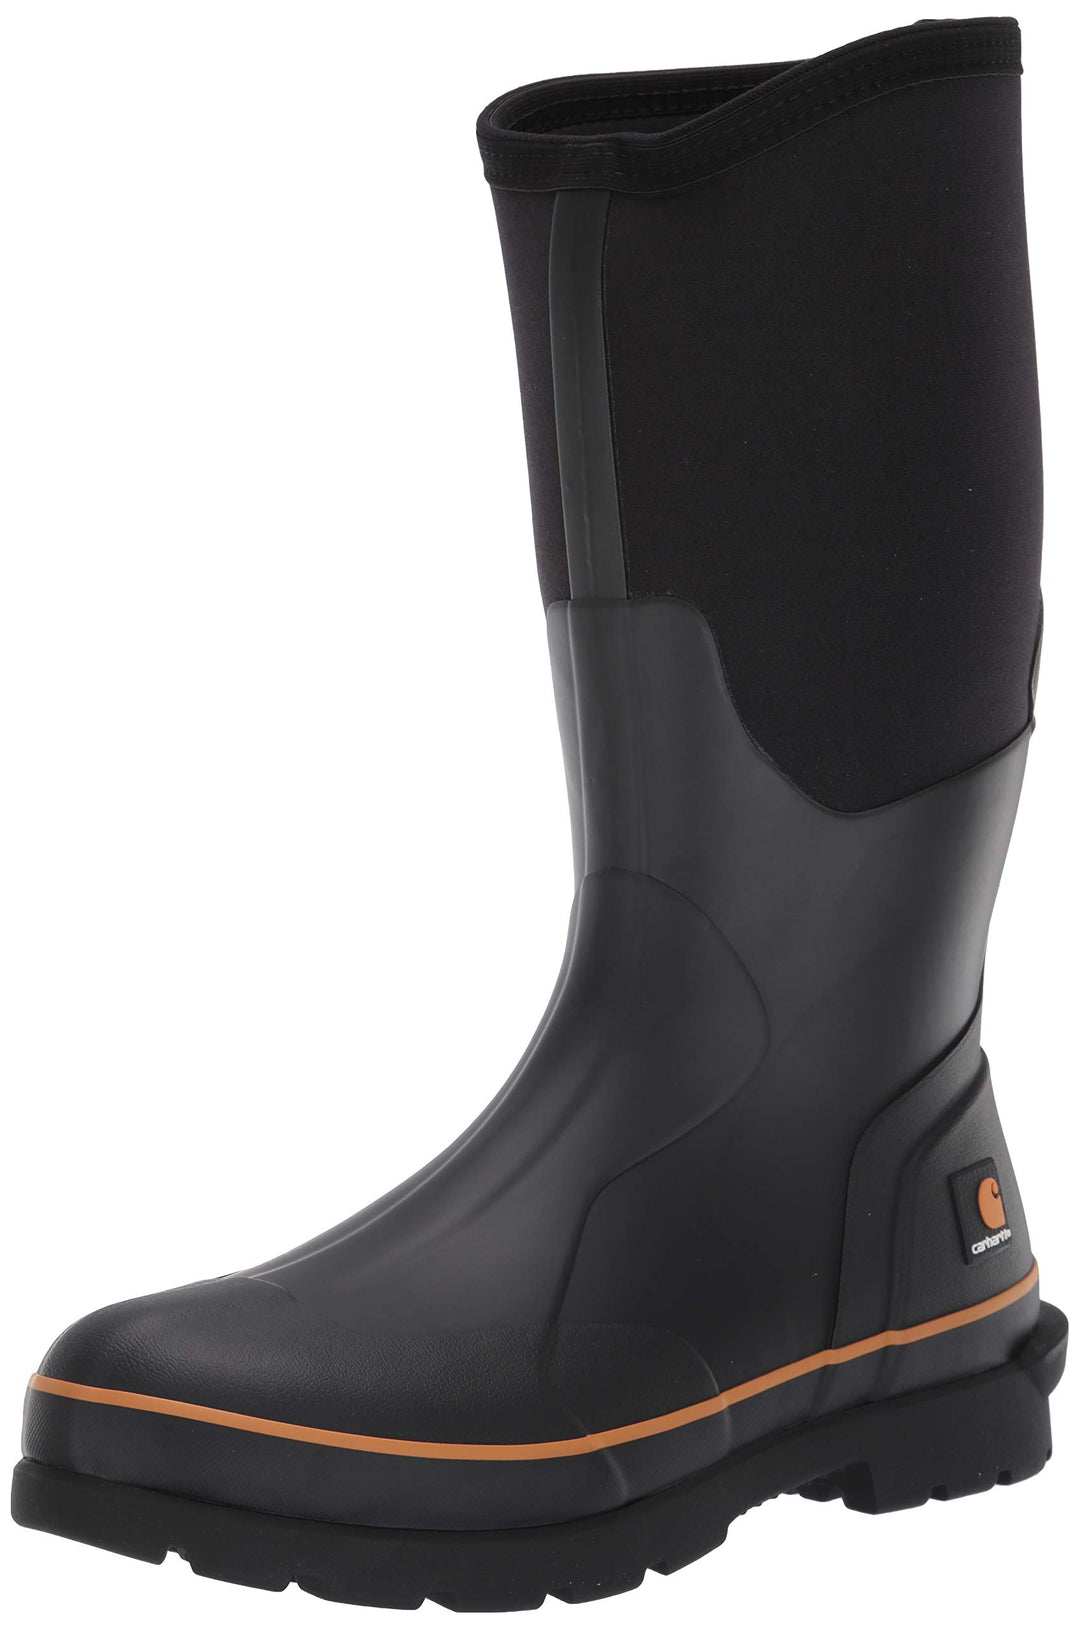 Carhartt Men's 15" Waterproof Rubber Pull-On Soft Toe CMV1151 Knee High Boot, Blk